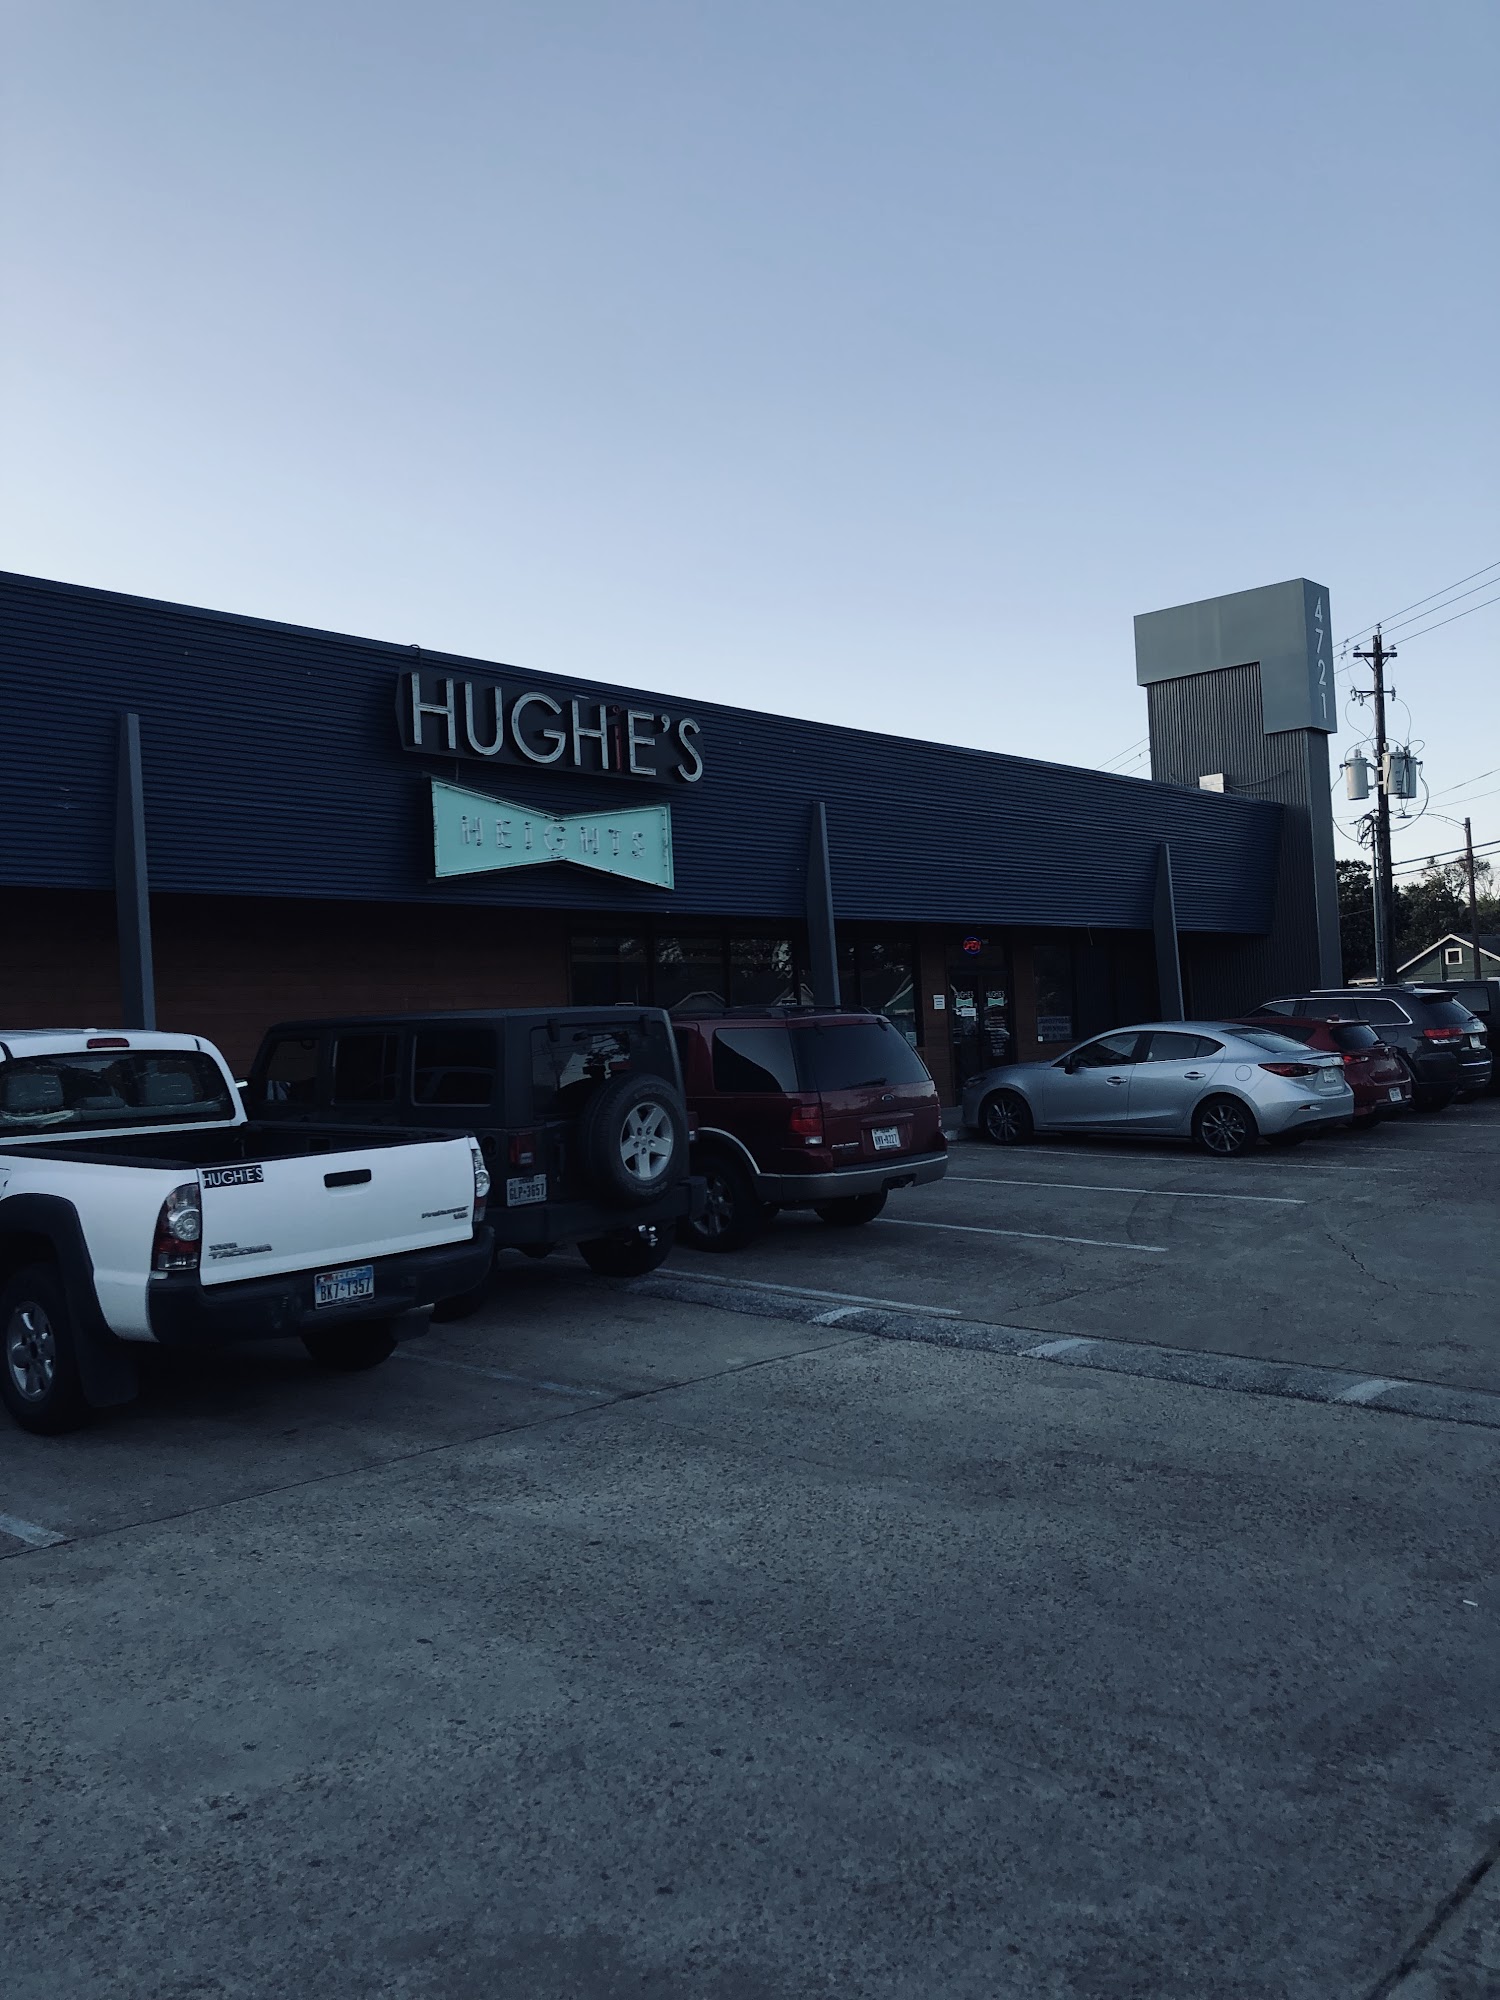 Hughie's